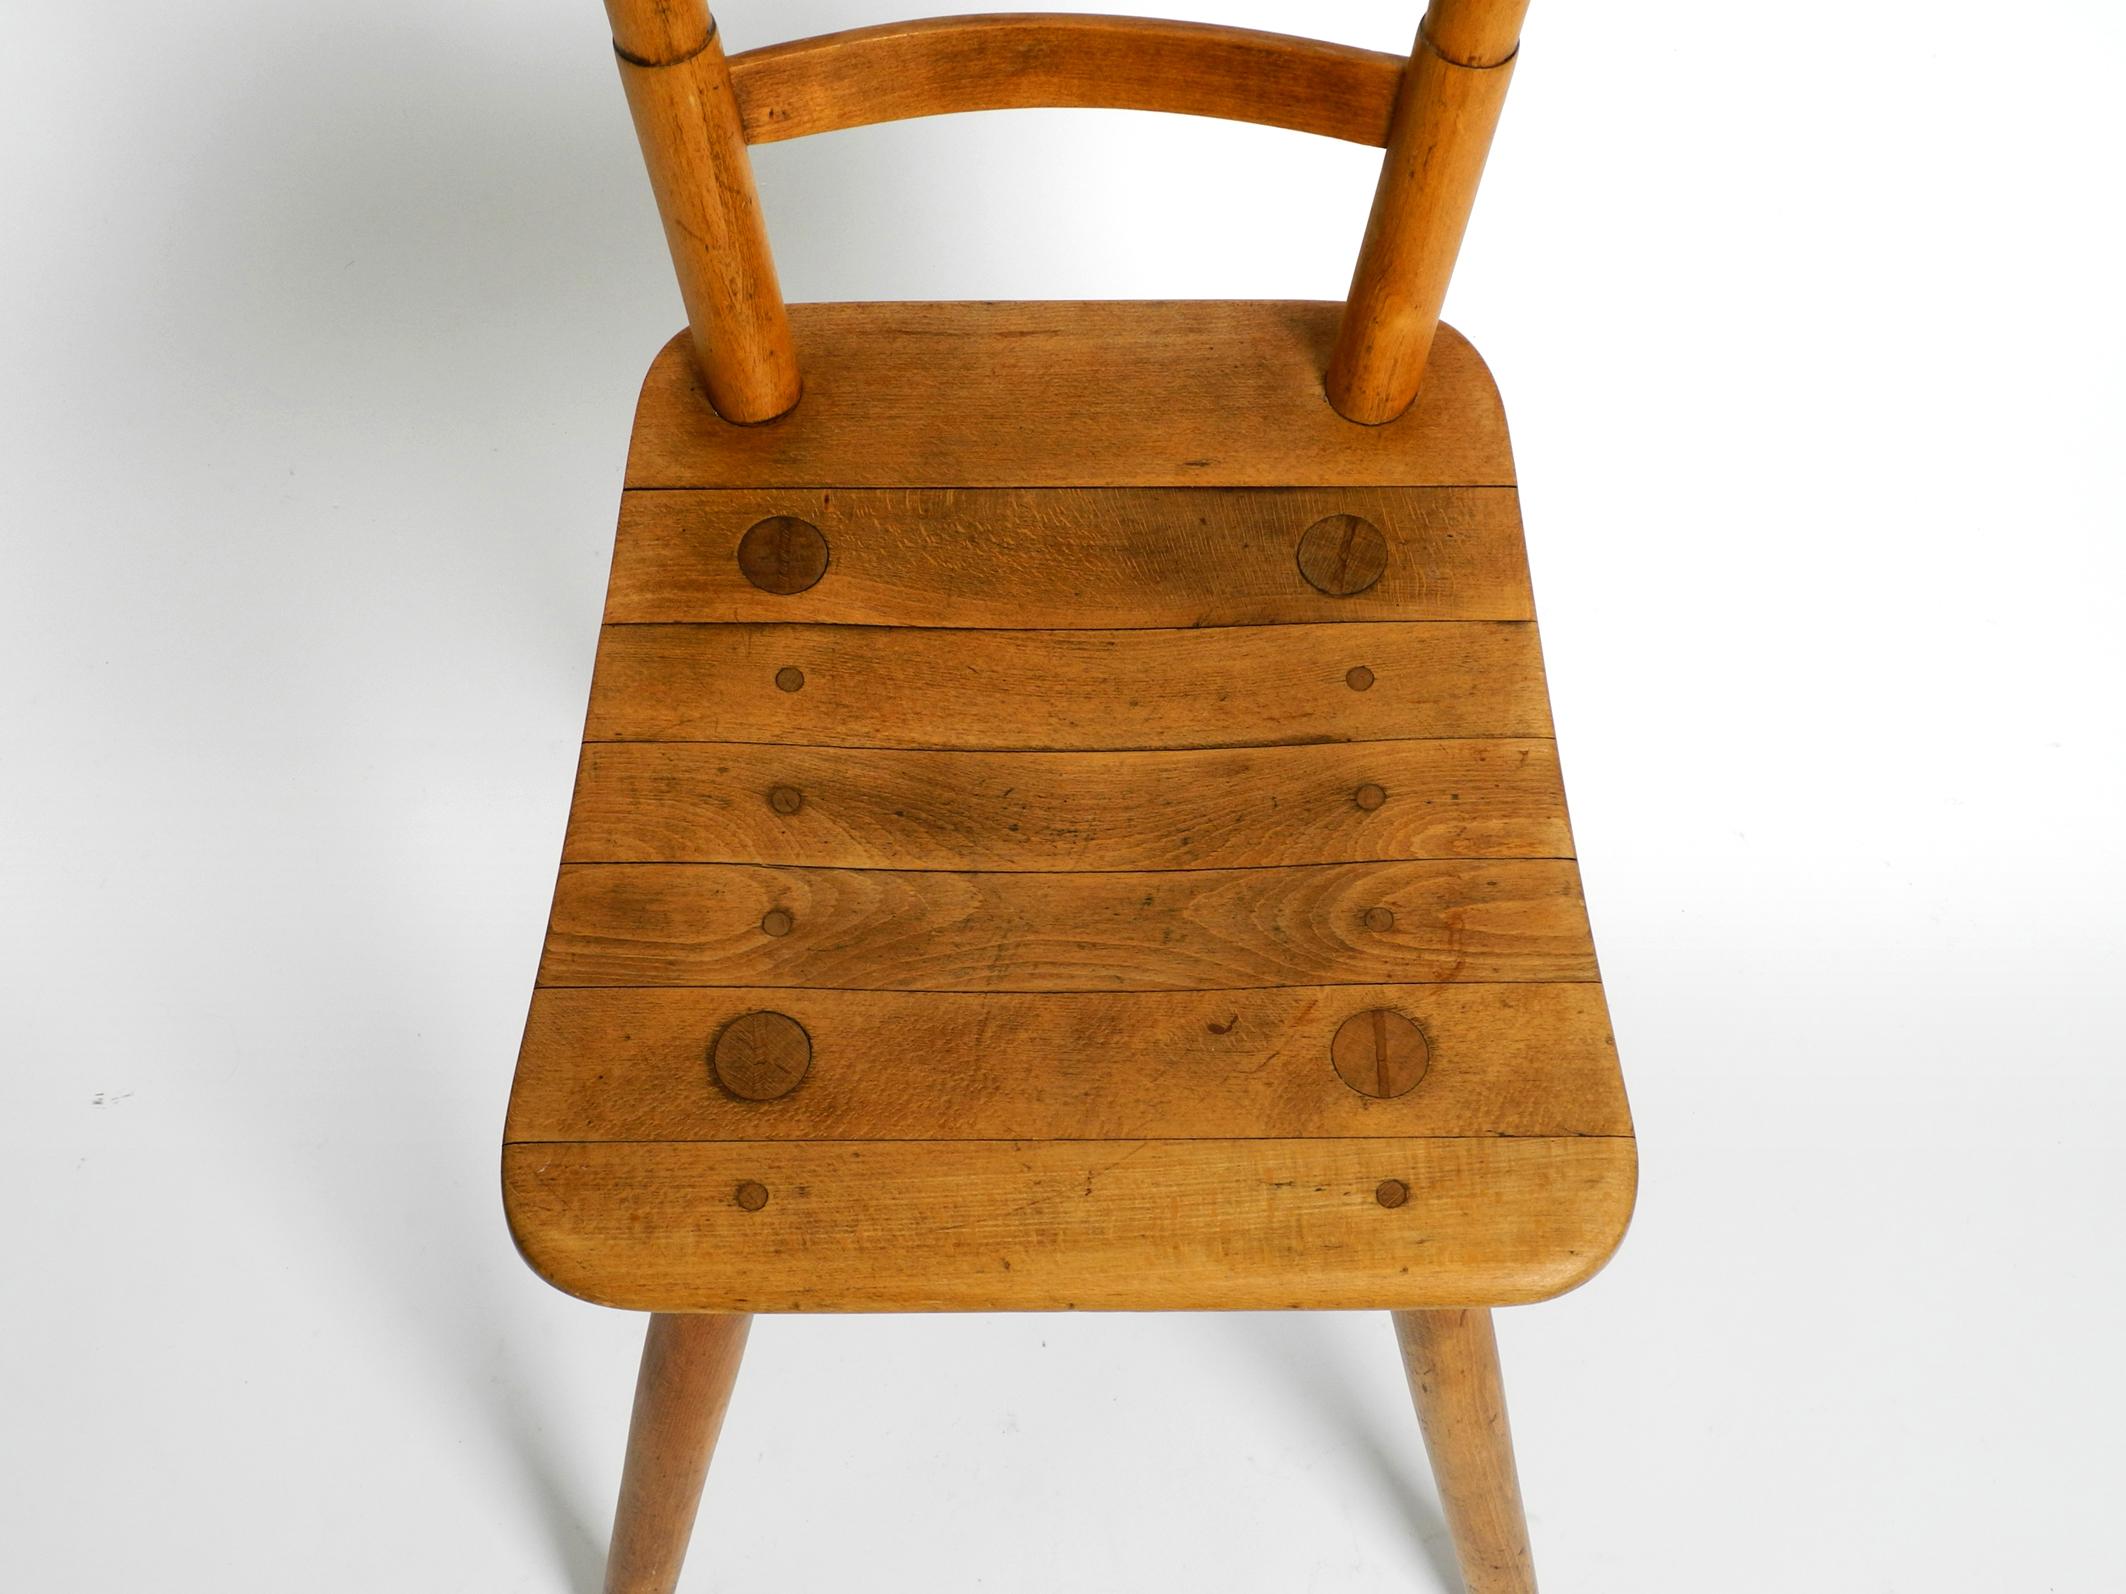 1930s Tübinger chair by the architect Prof. Adolf Gustav Schneck for Schäfer  For Sale 7